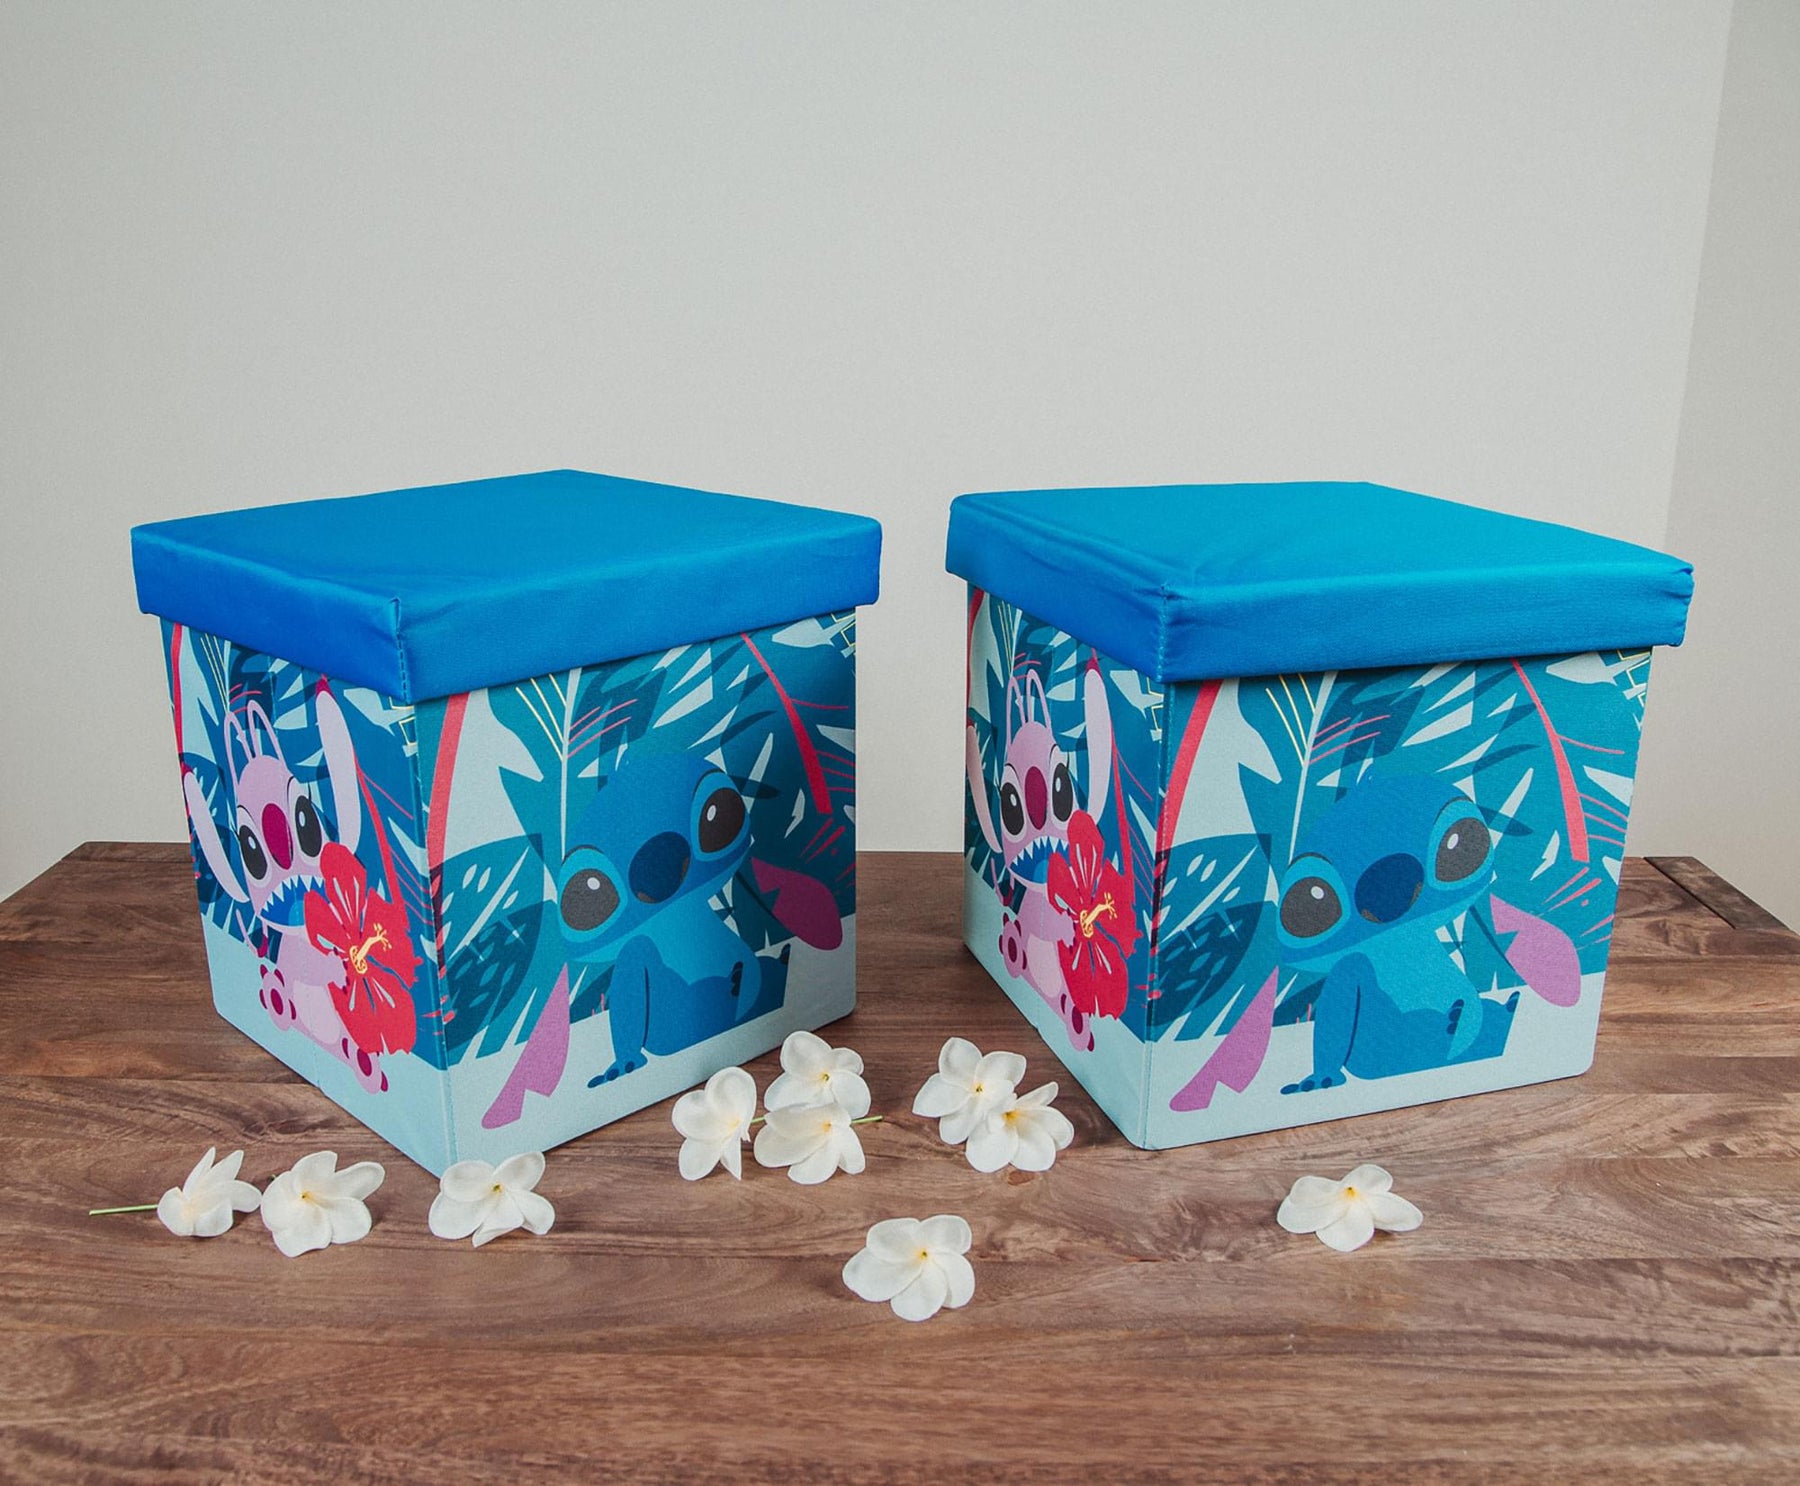 Disney Stitch and Angel 15-Inch Storage Bin Cube Organizers with Lids | Set of 2